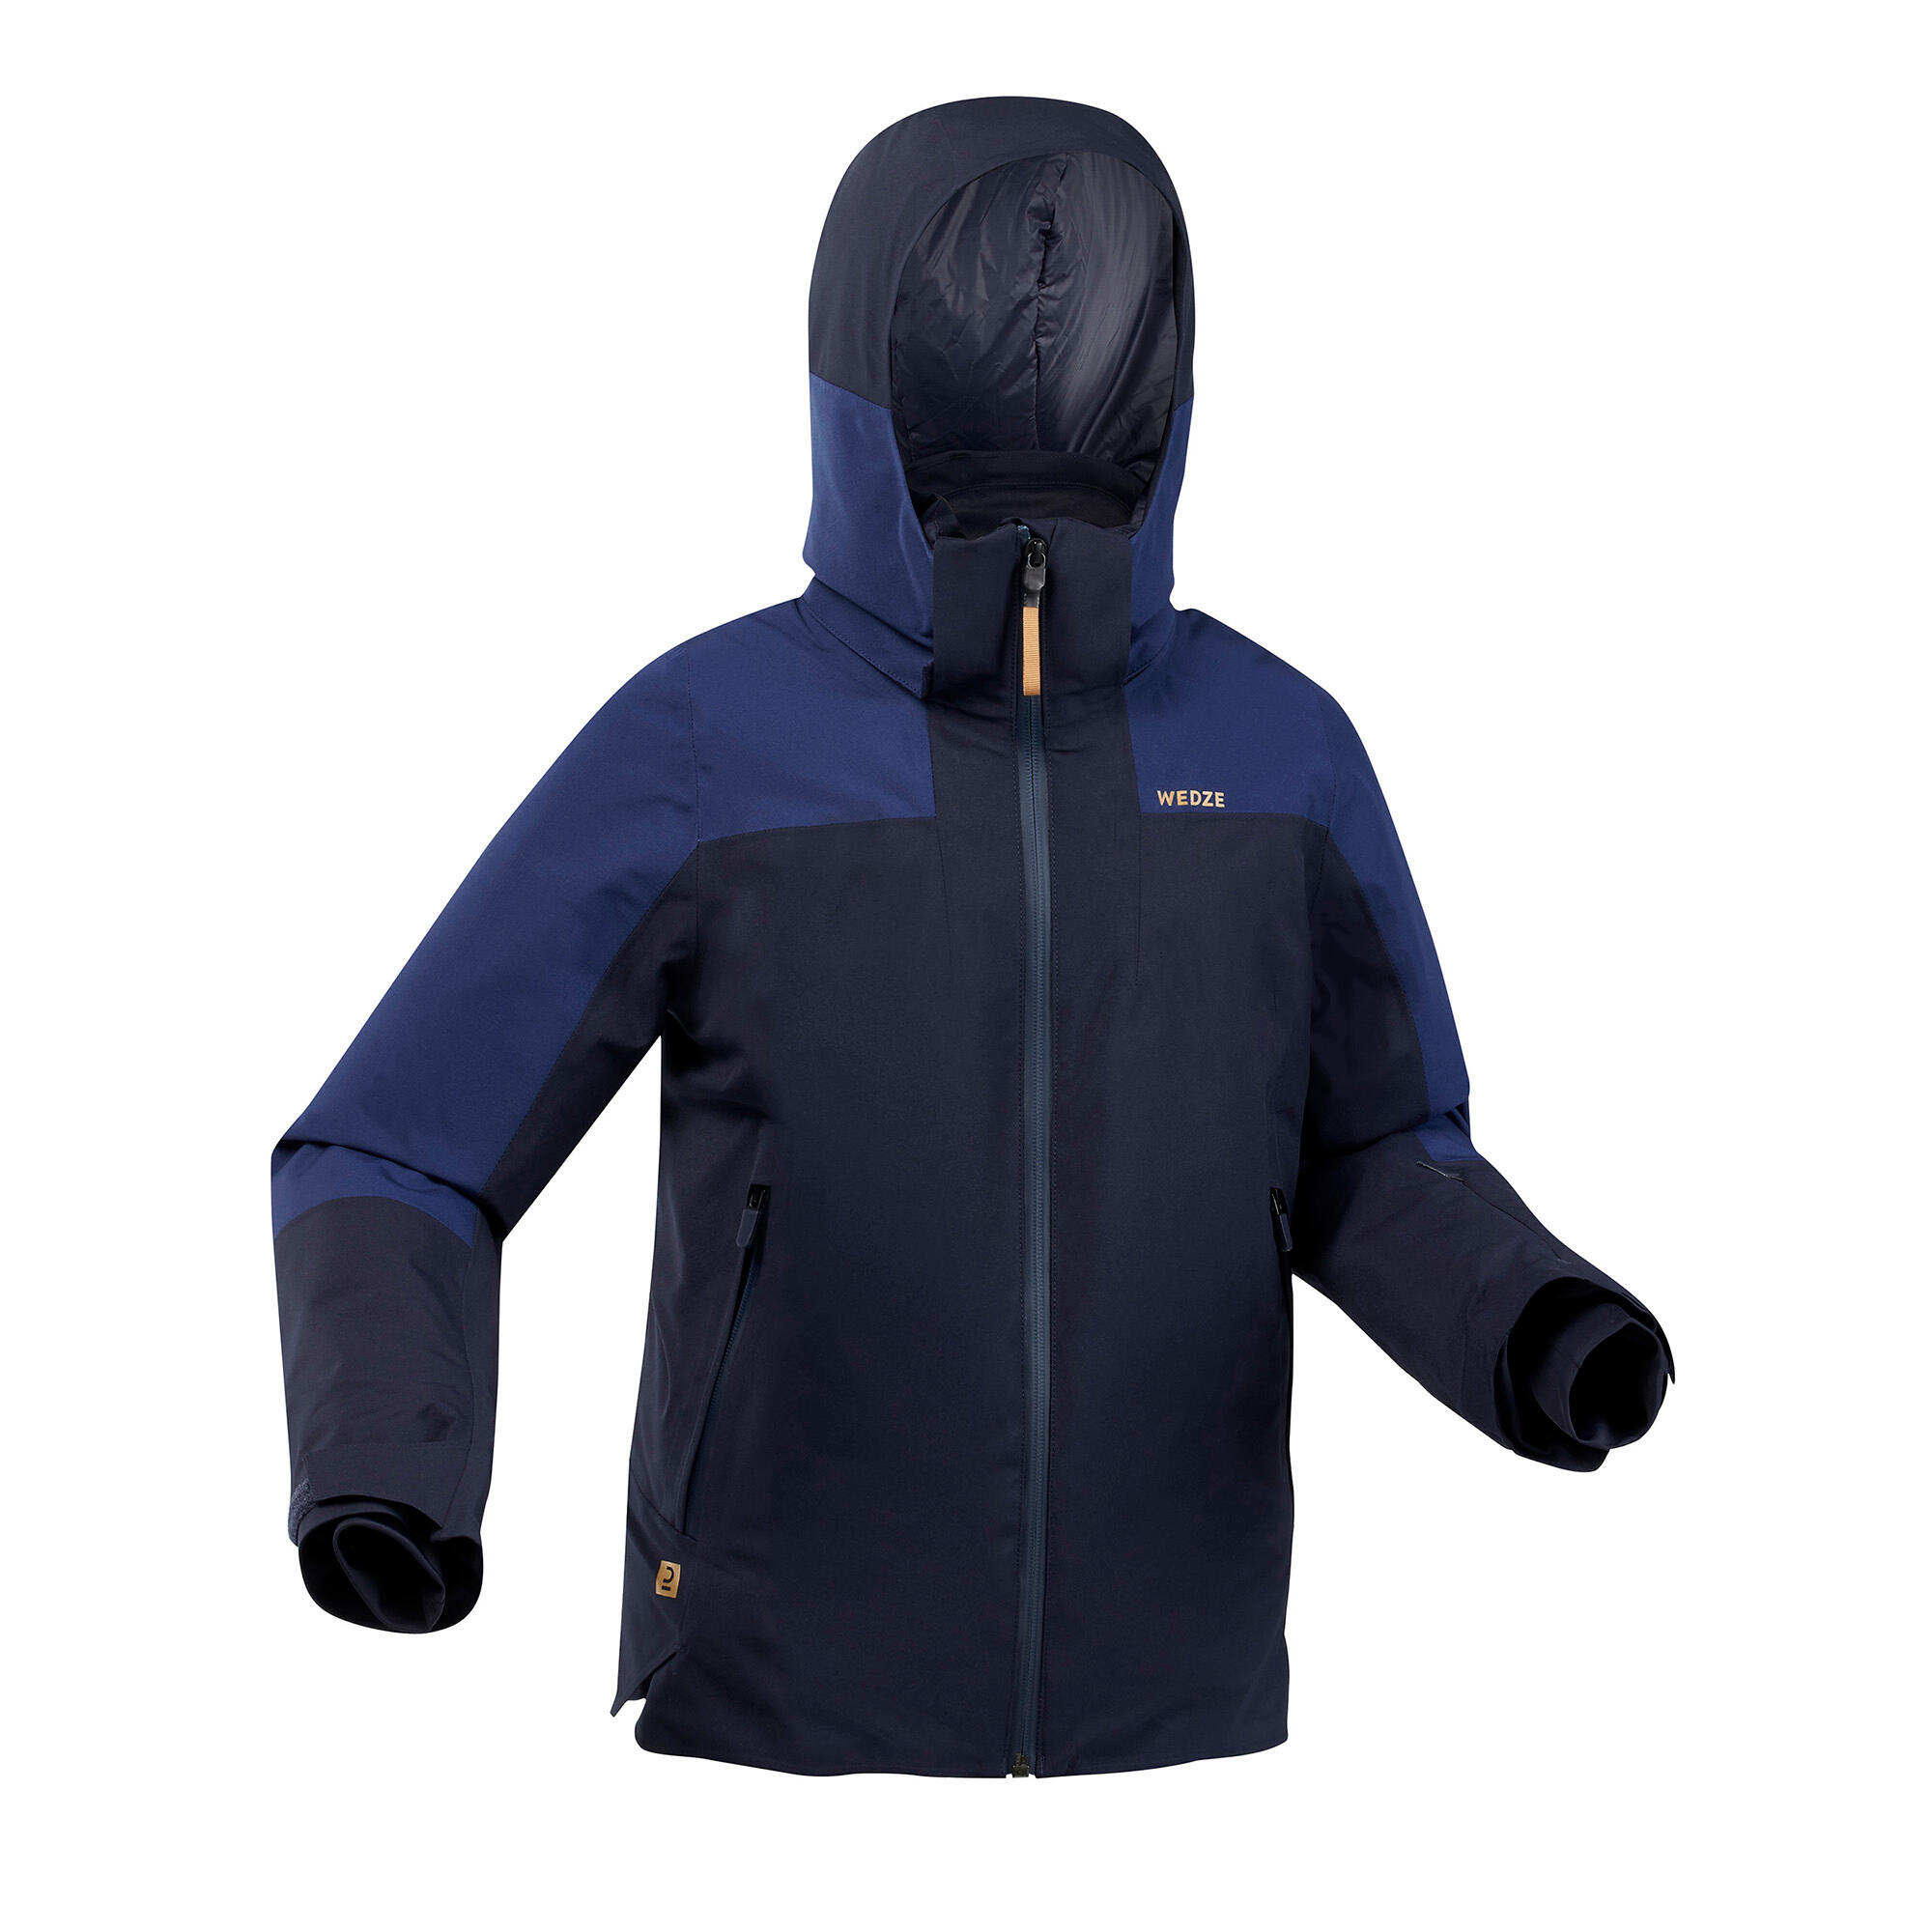 Kids’ Warm Ski Jacket - Ski 900 Blue - Asphalt blue, Galaxy blue ...